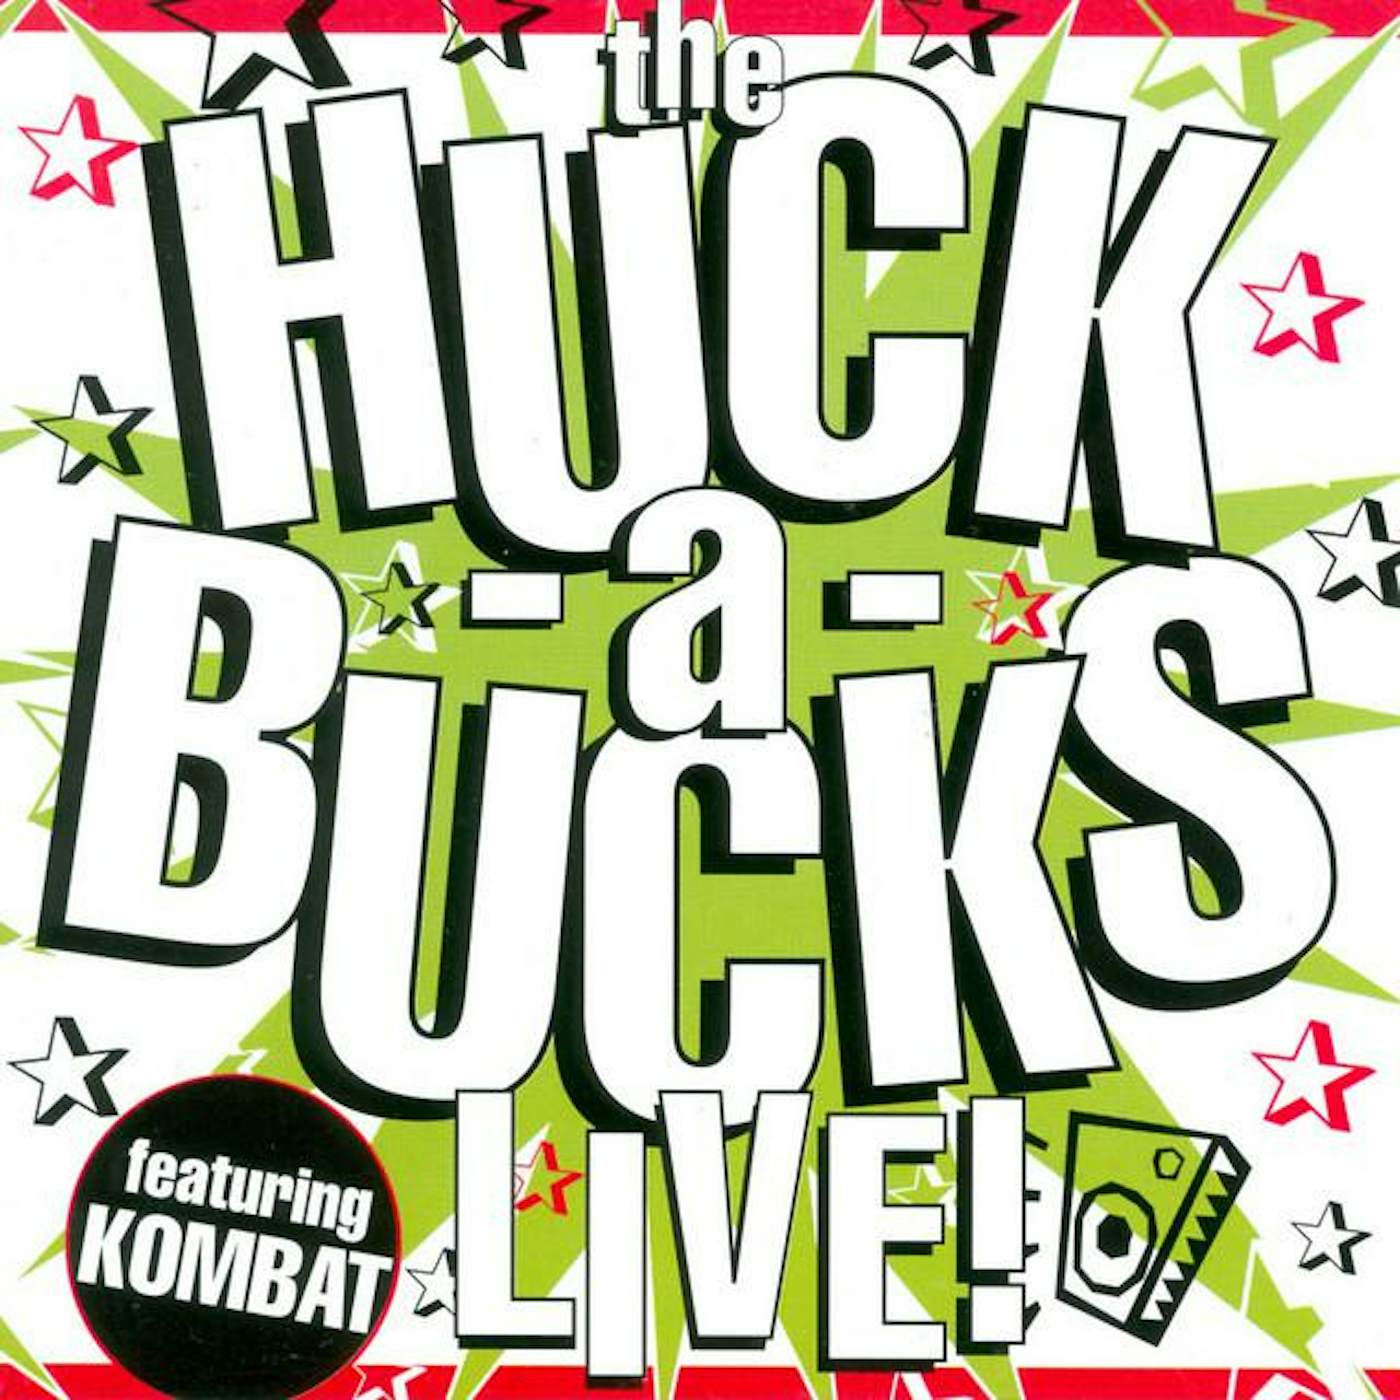 The Huck-A-Bucks